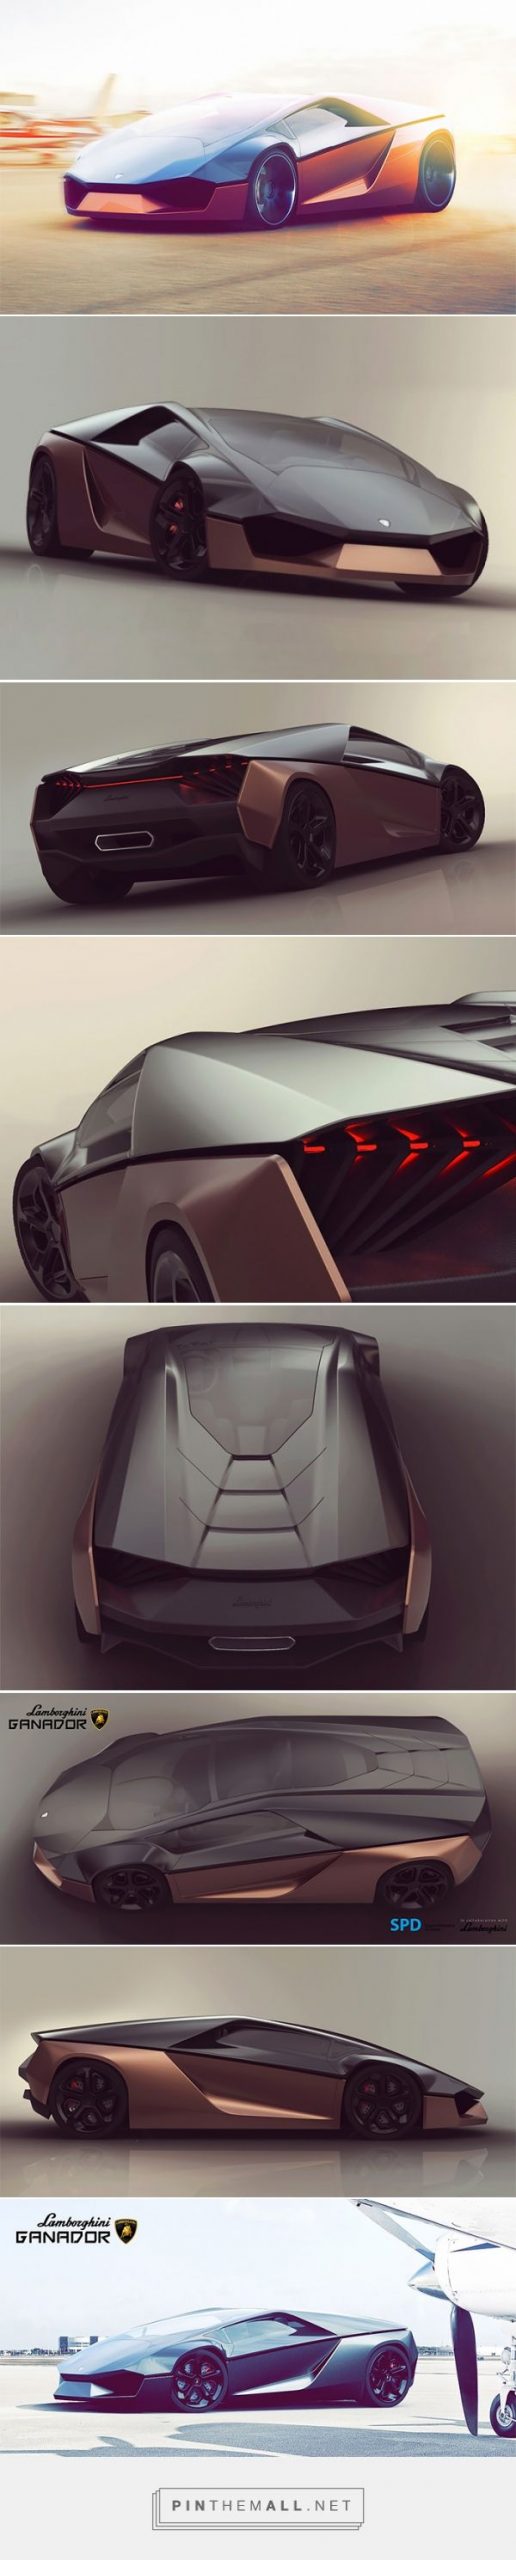 Lamborghini Ganador Concept by Mohammad Hossein Amini Yekta